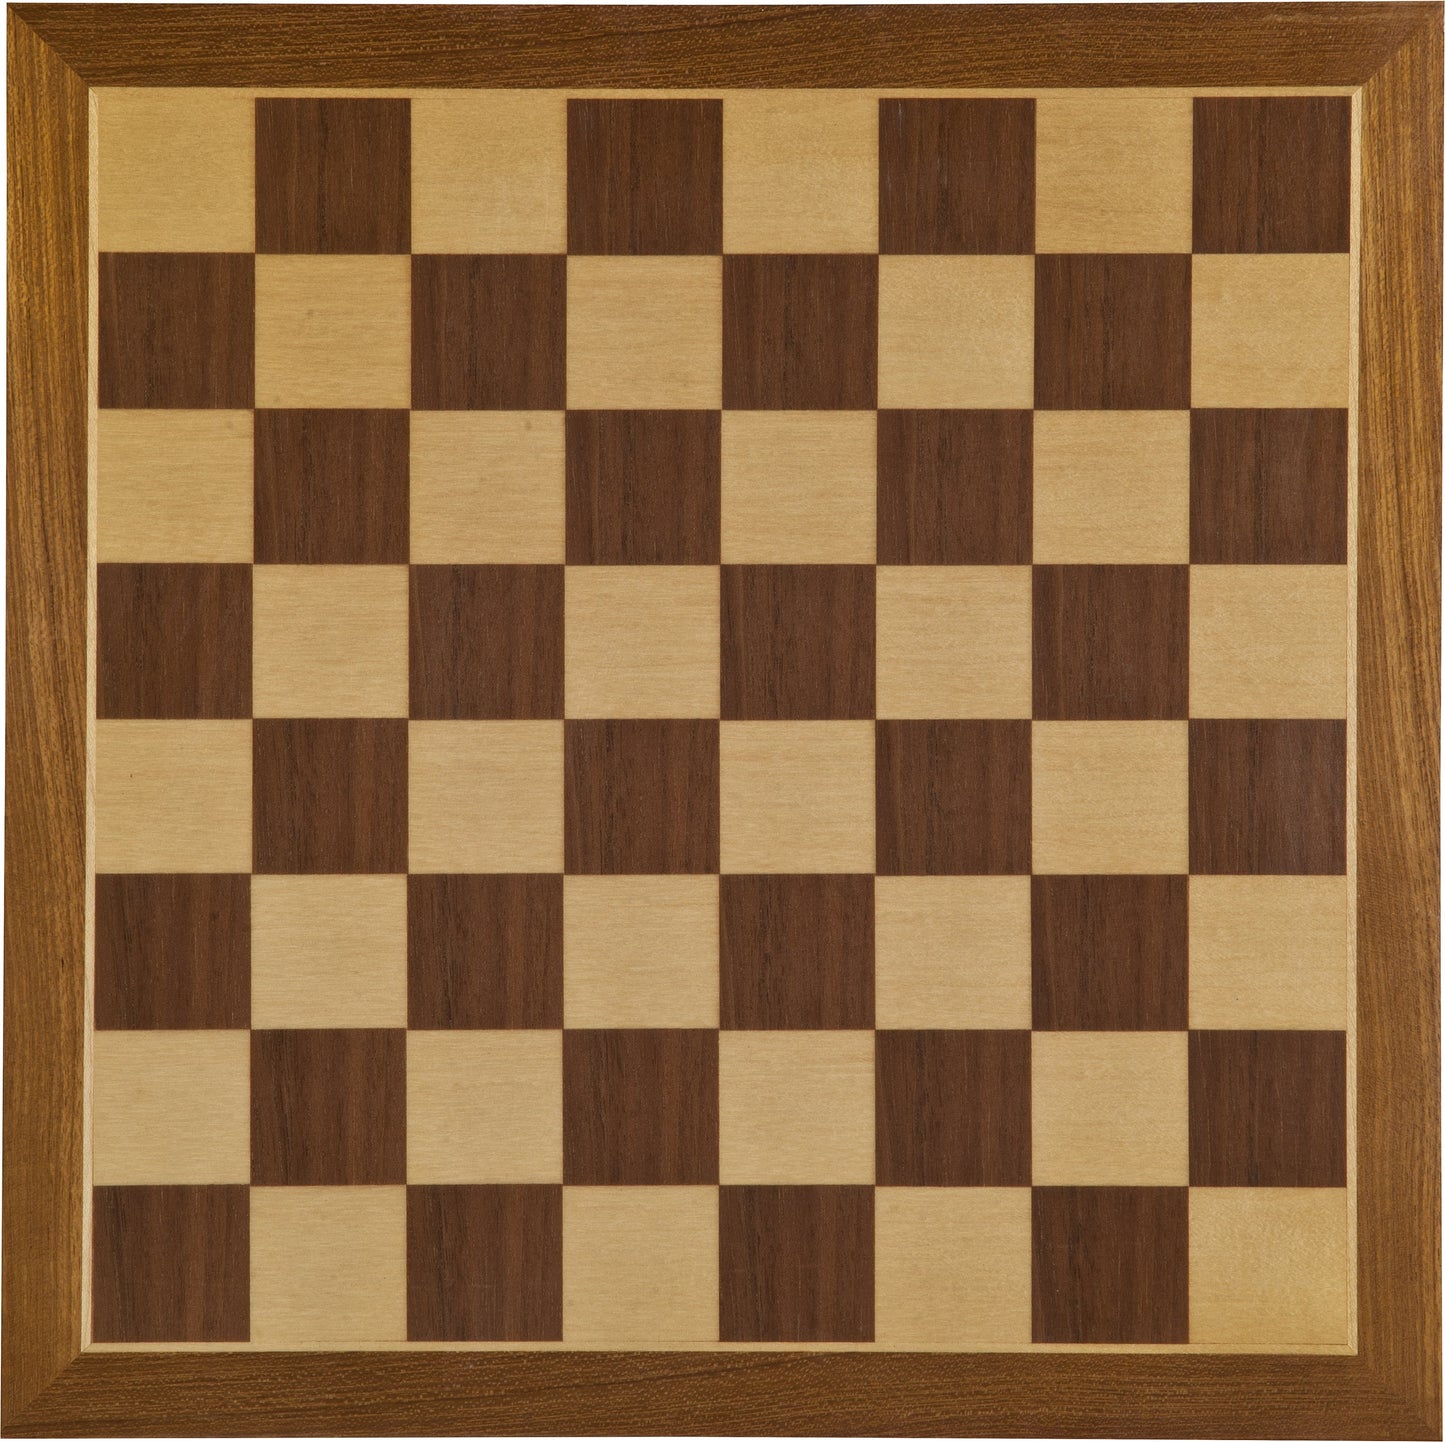 12 inch Inlaid Wood Chess Board